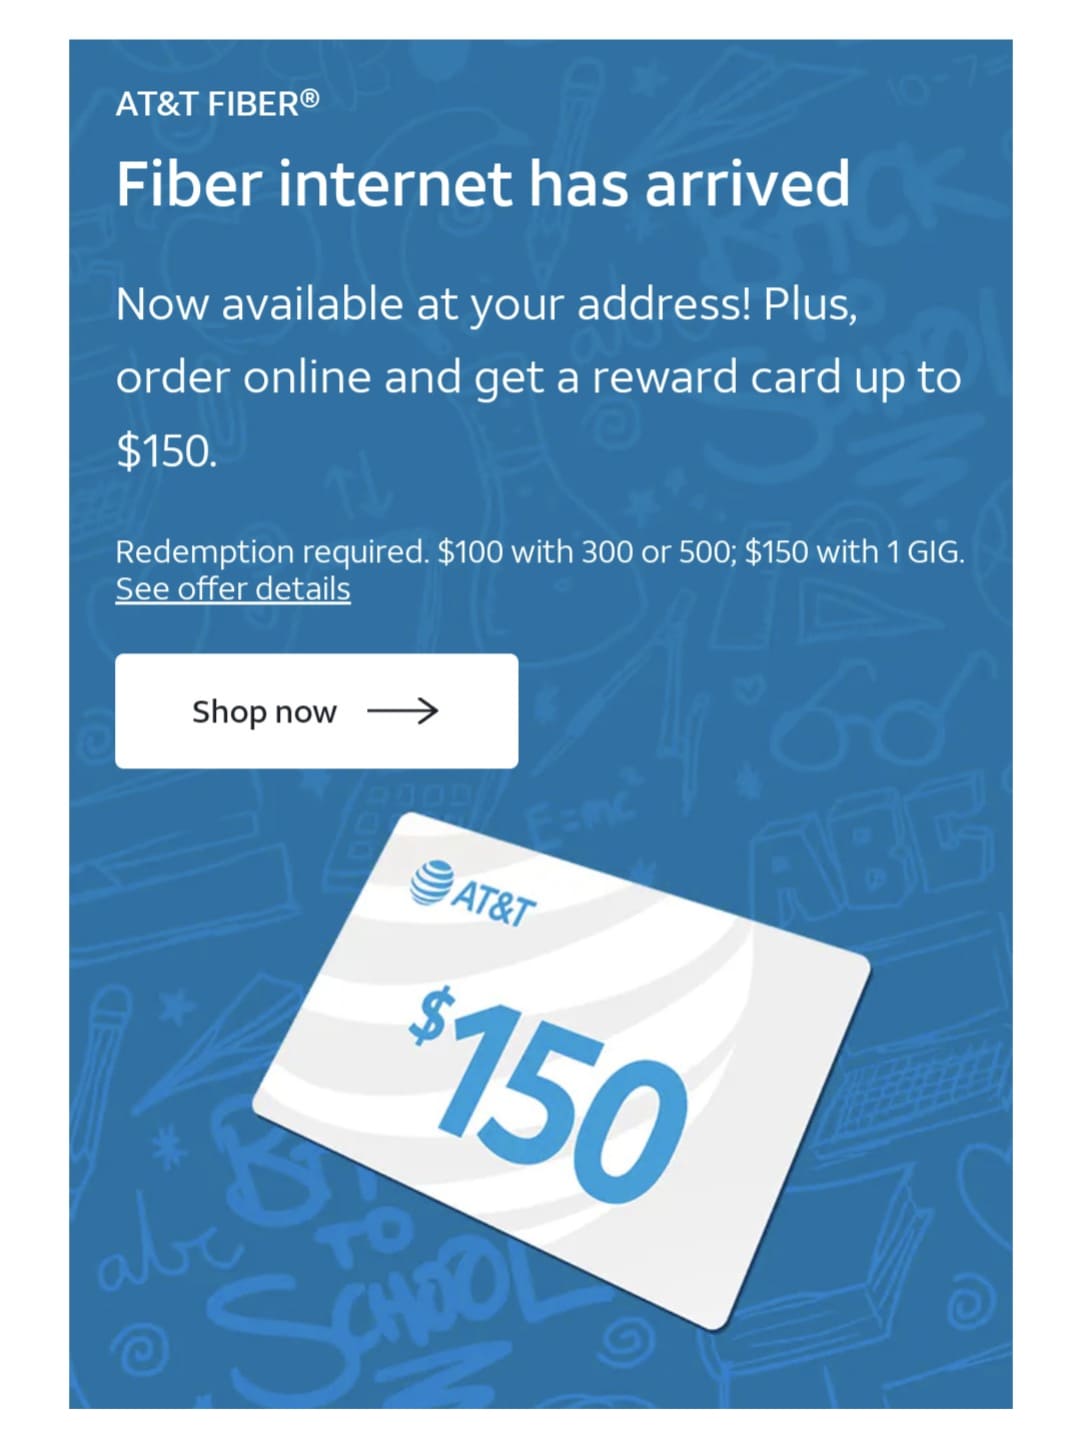 AT&T Fiber Gift Card Reward Home Internet